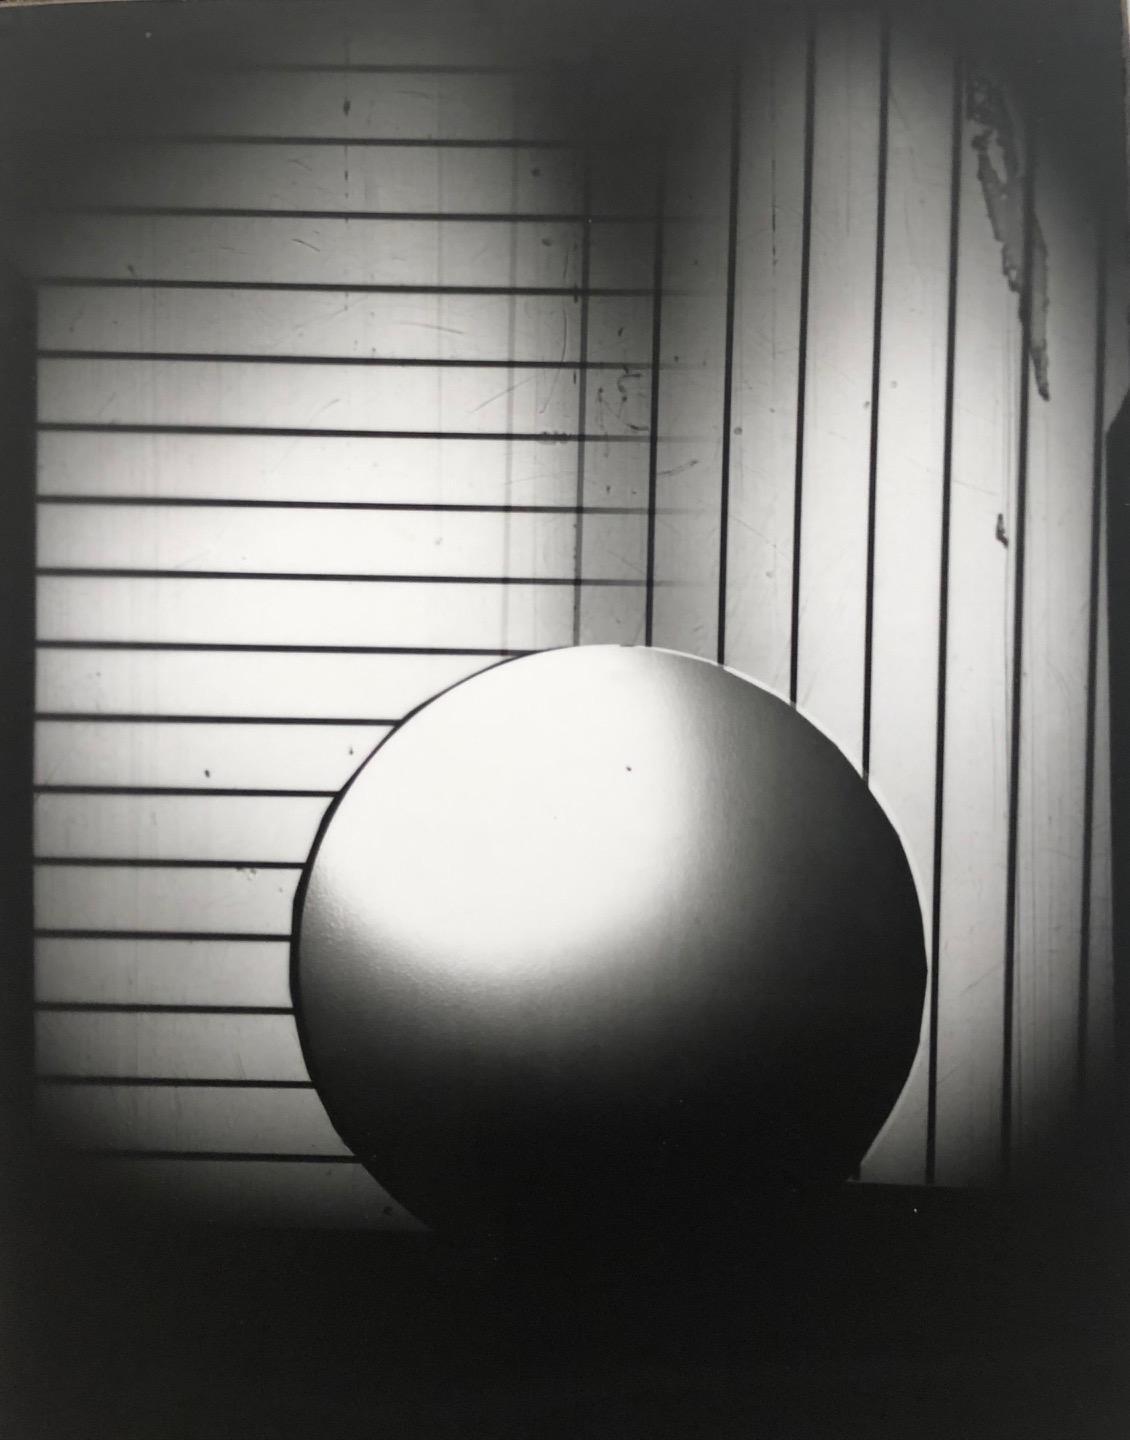 Juan Fernandez, Sphere 1 (Positive), 2022, Laminated silver gelatin print mounted on masonite 14” x 11” x 1”